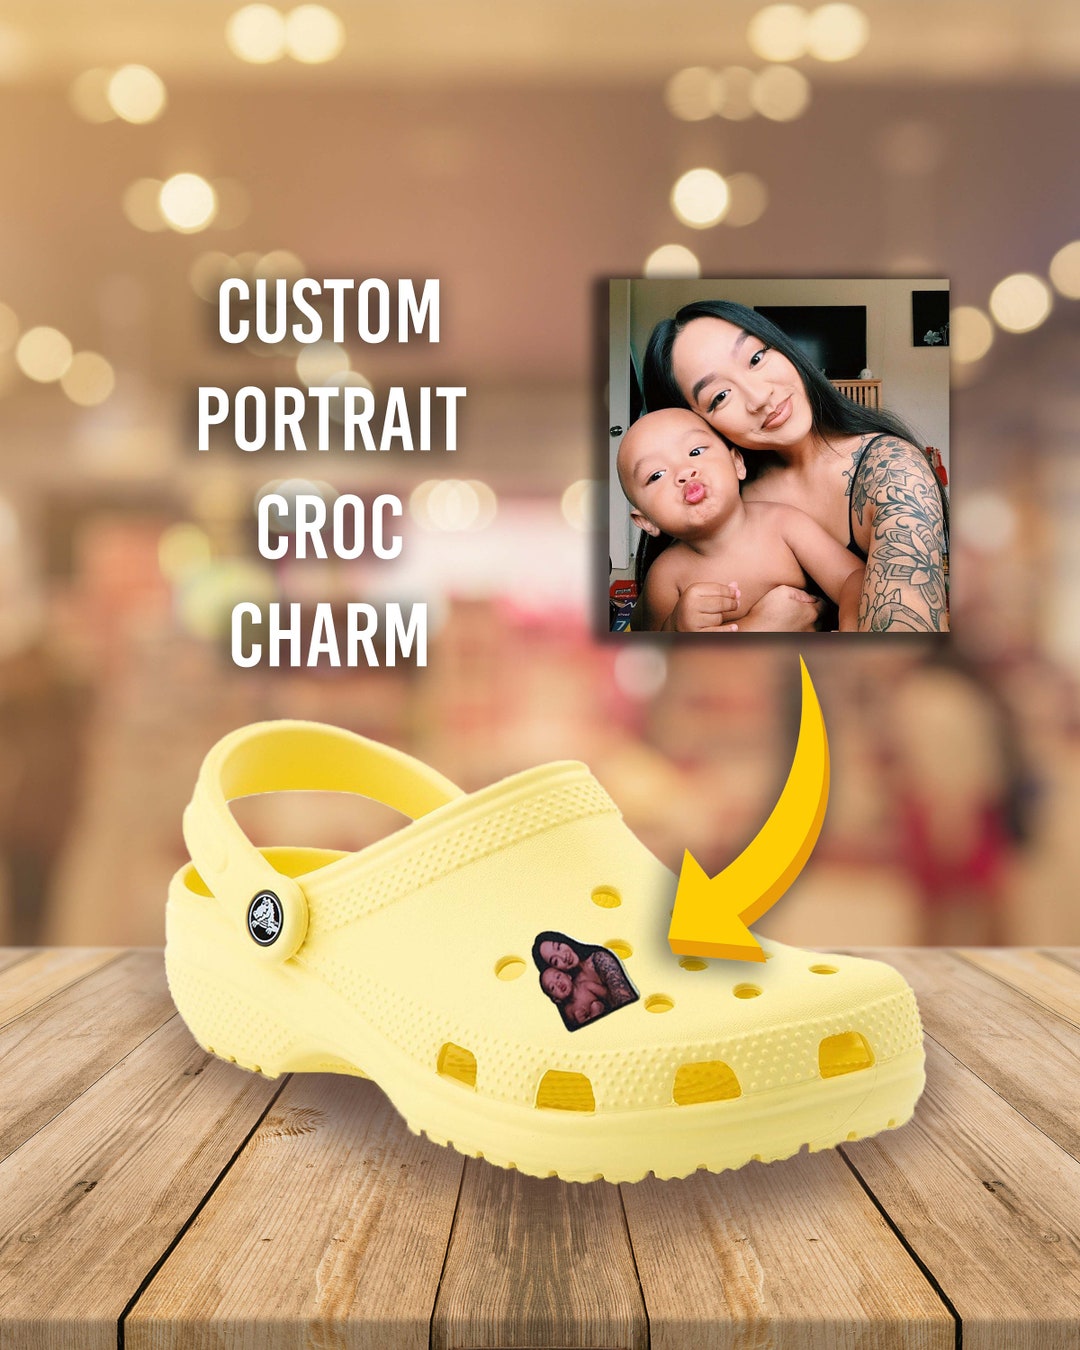 Custom Logo Shoe Charms 